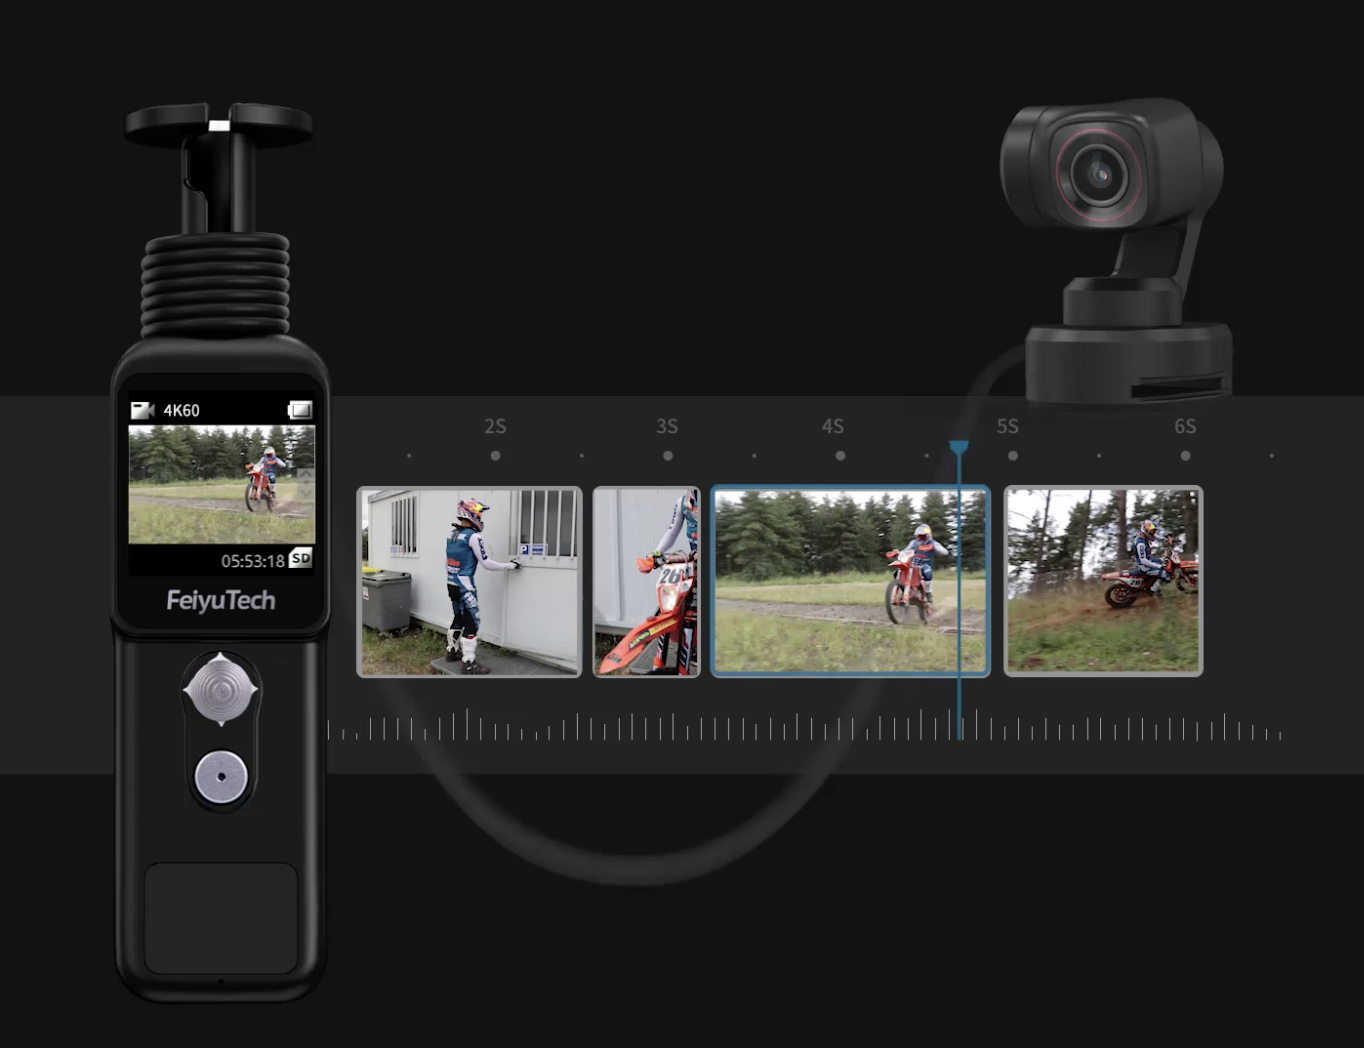 FeiyuTech Pocket 2 and Pocket 2S – Detachable, Wearable Camera